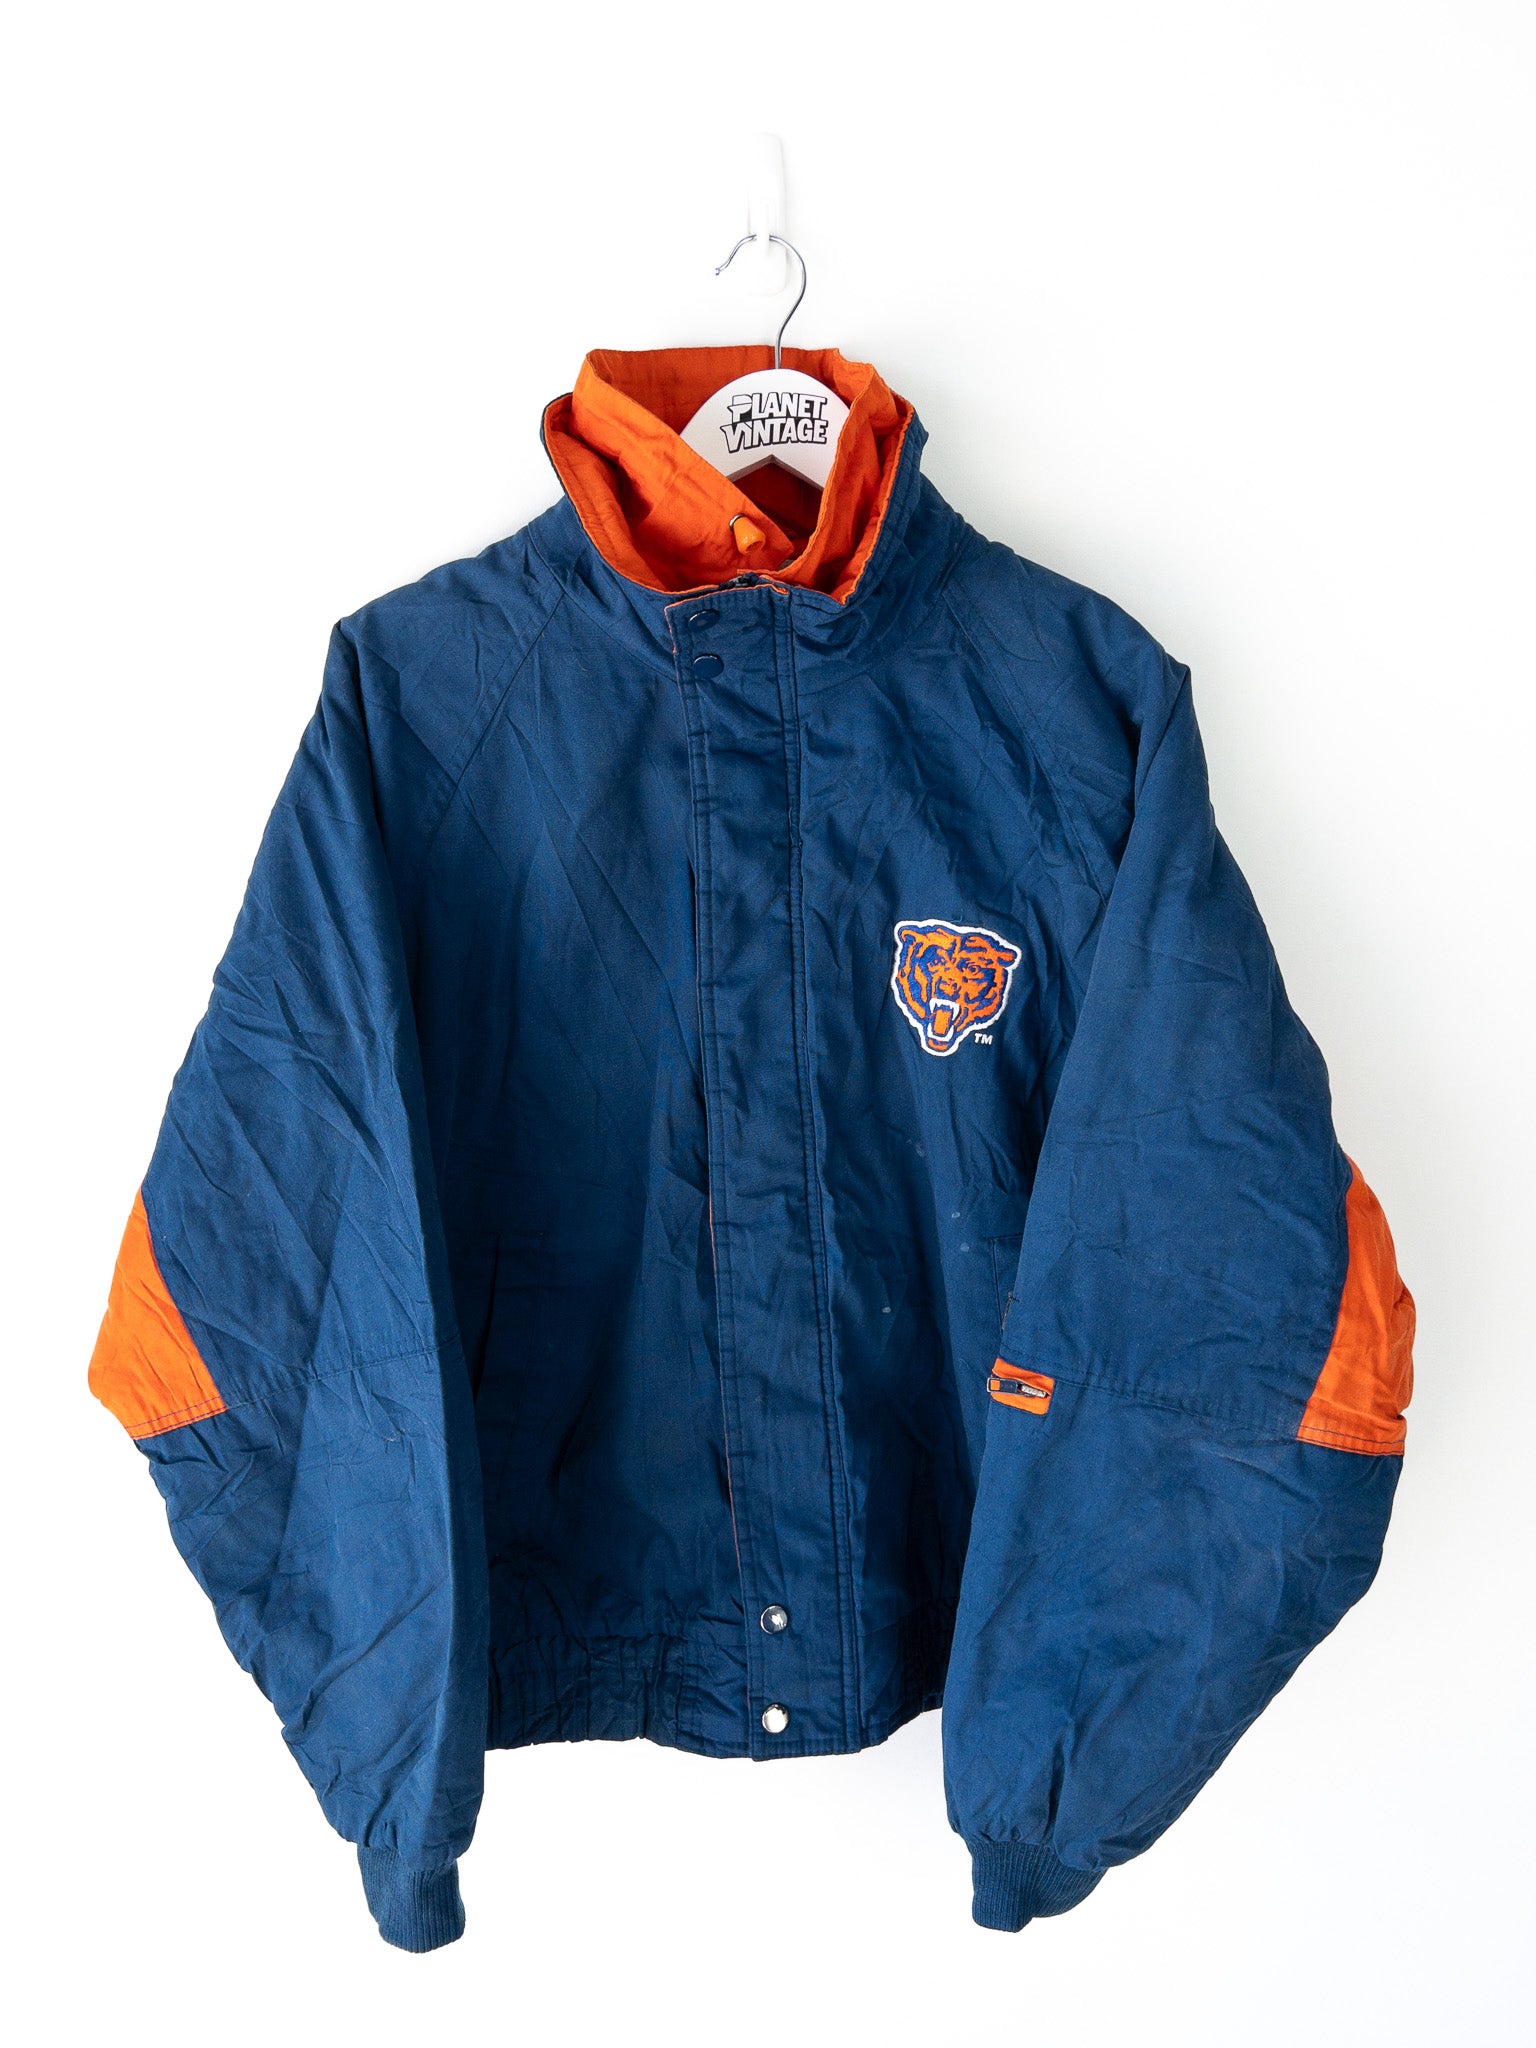 Vintage Chicago Bears Jacket (M)